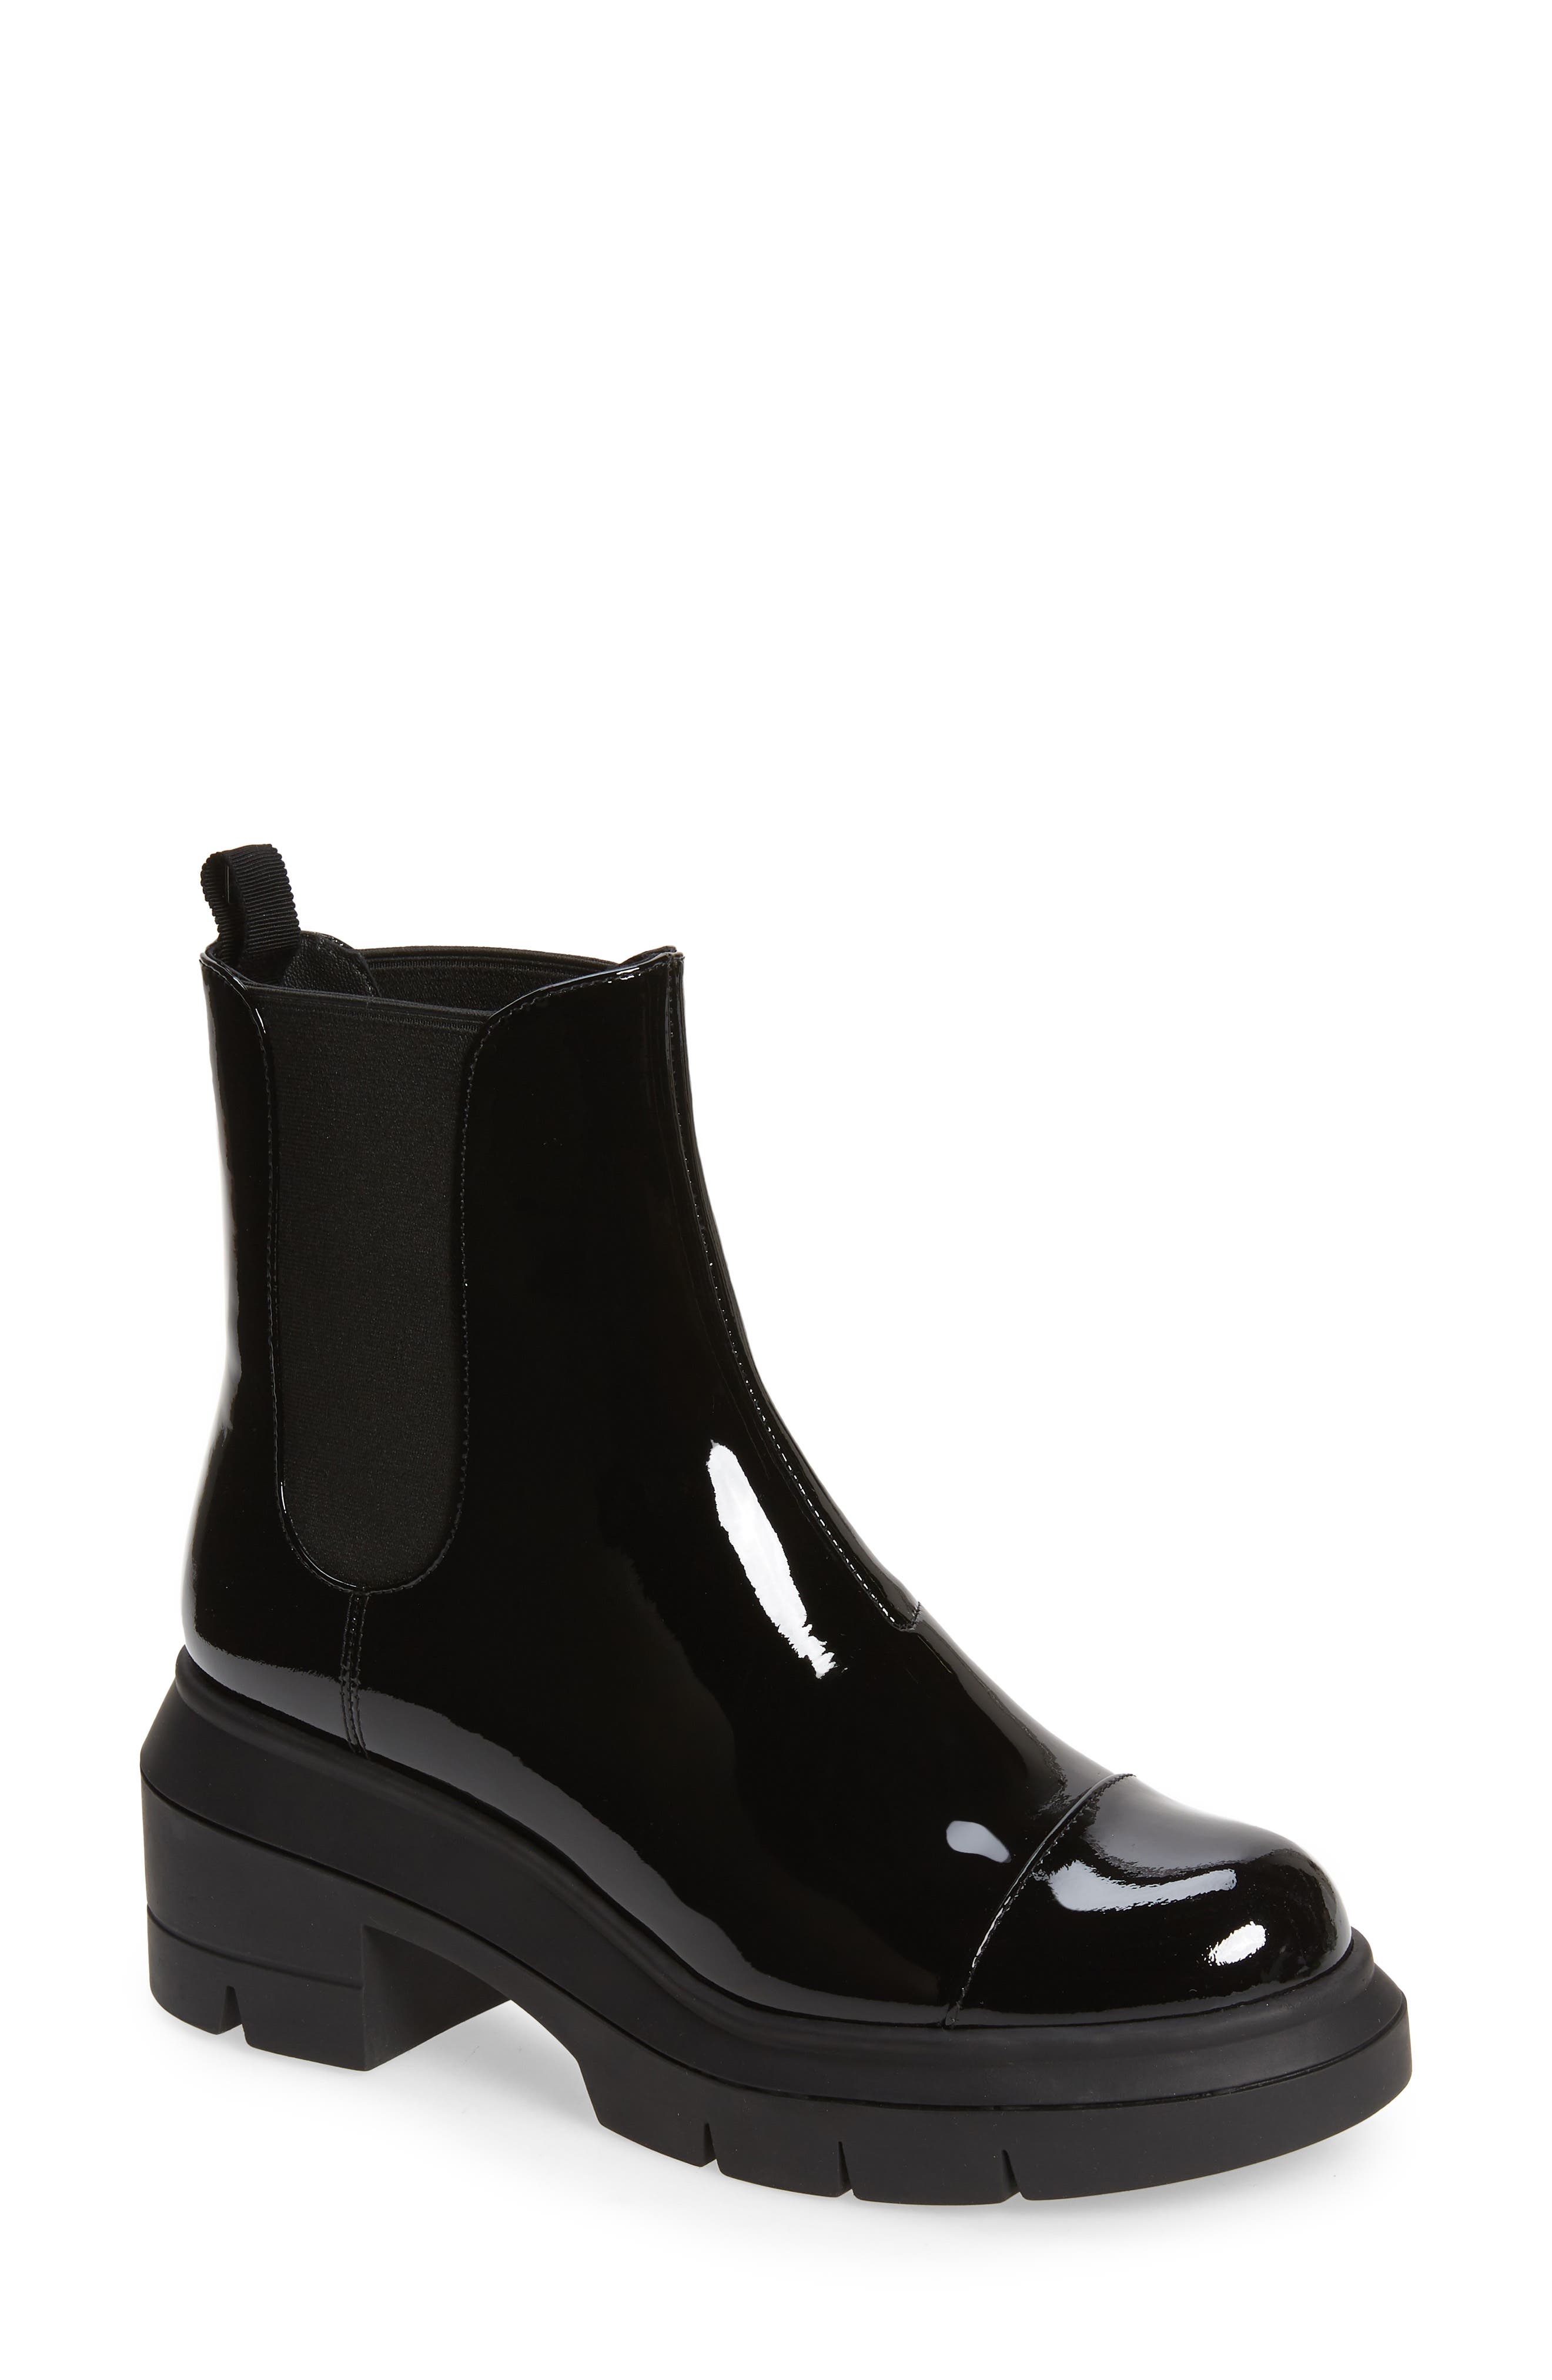 black chelsea boots size 7